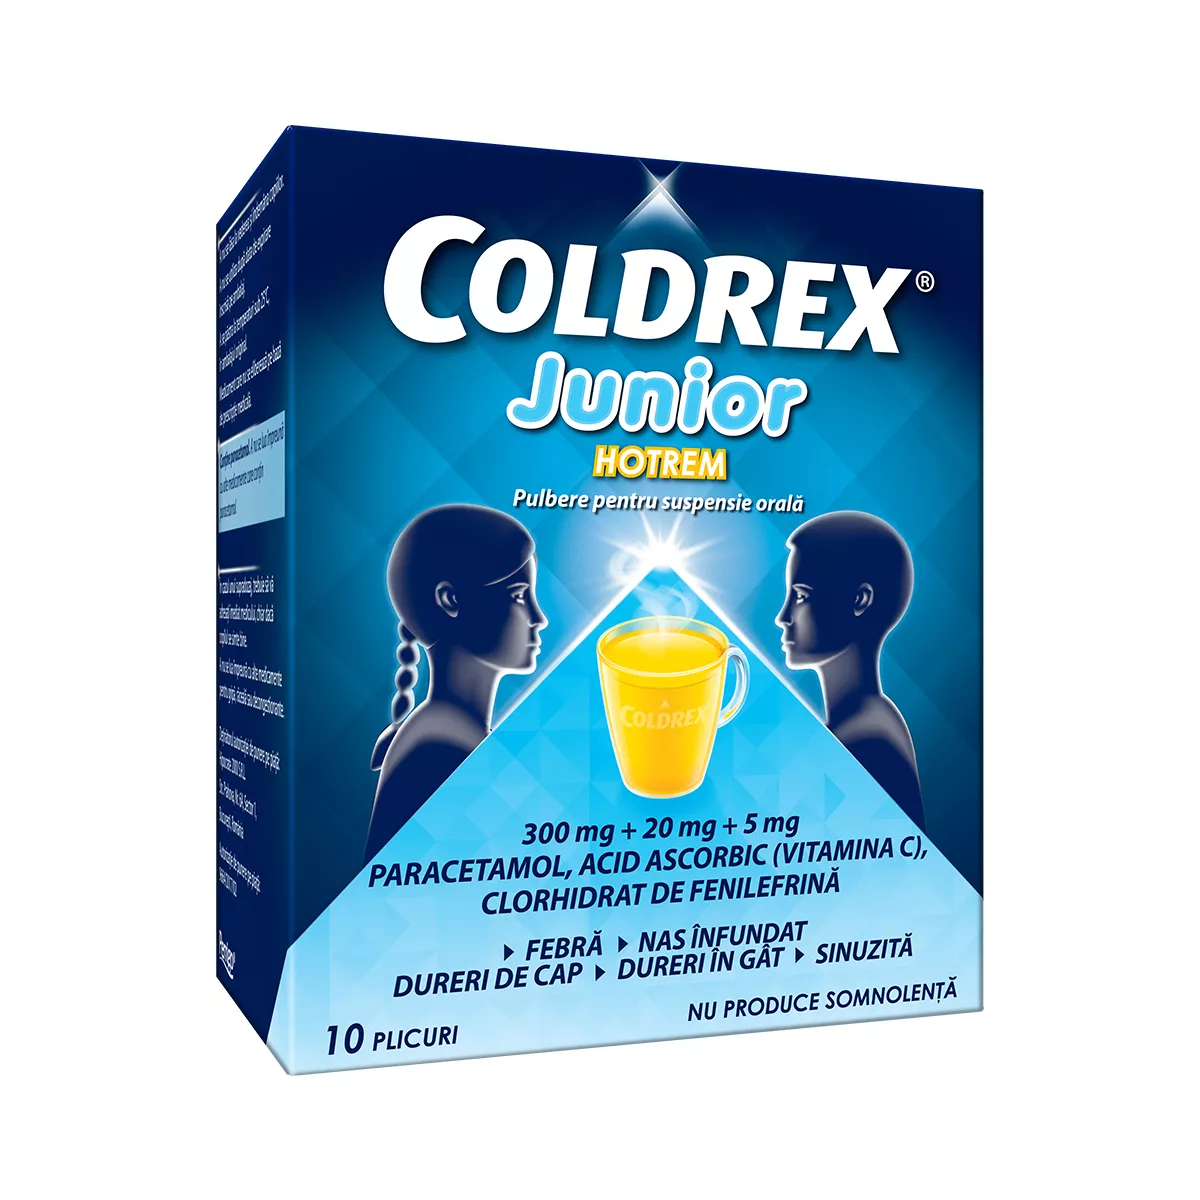 Coldrex Junior Hotrem 3g x 10pl, [],epastila.ro